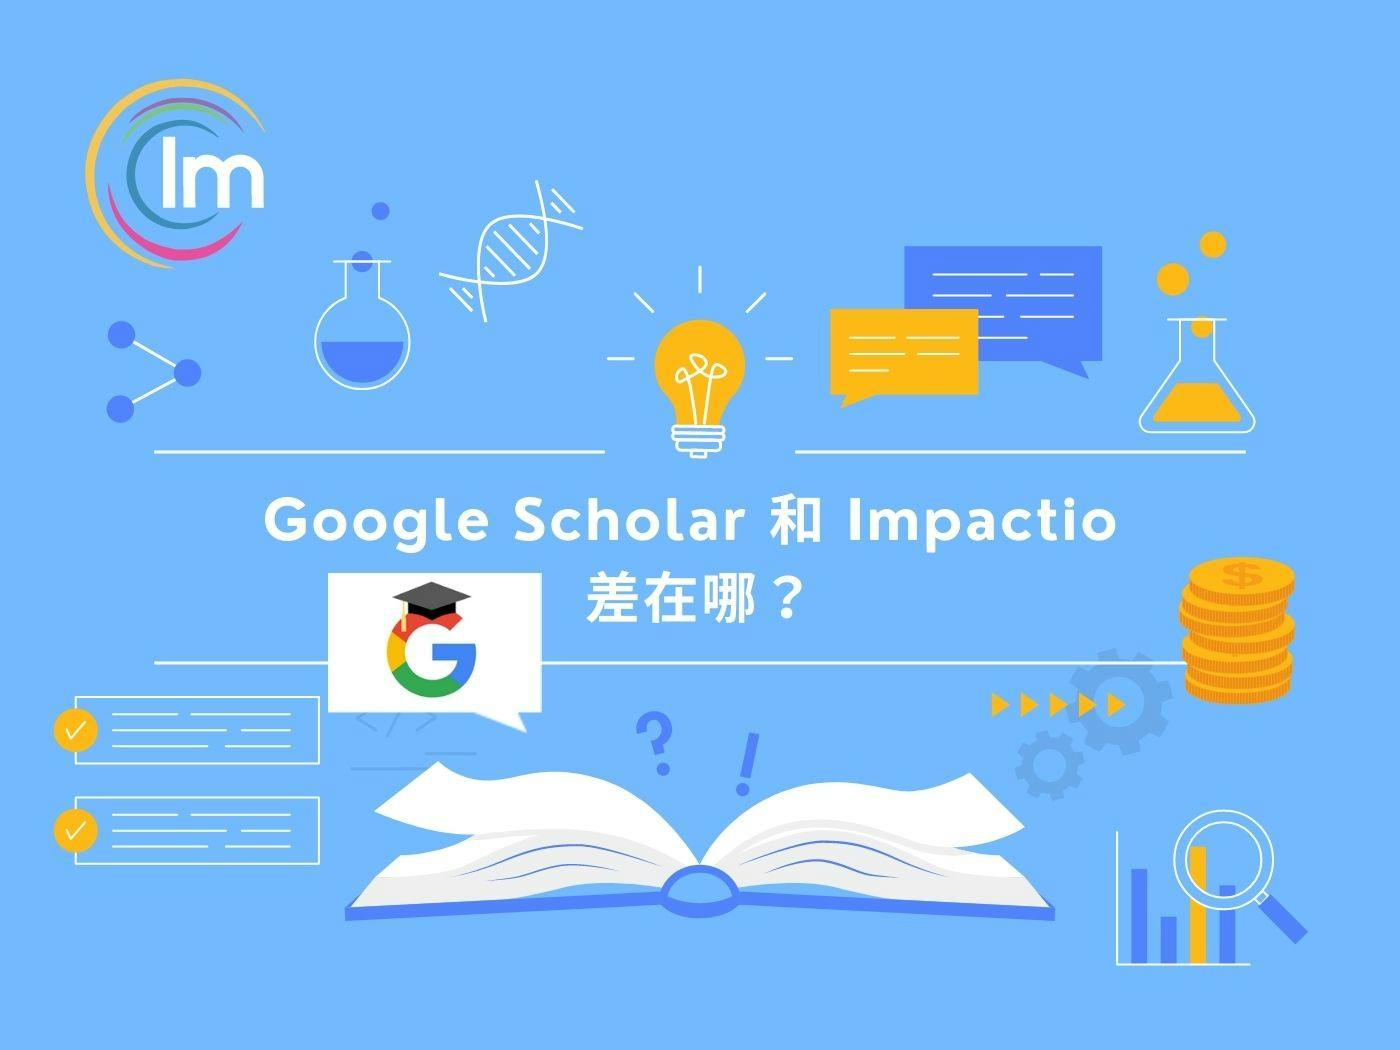 Google Scholar和Impactio差在哪？